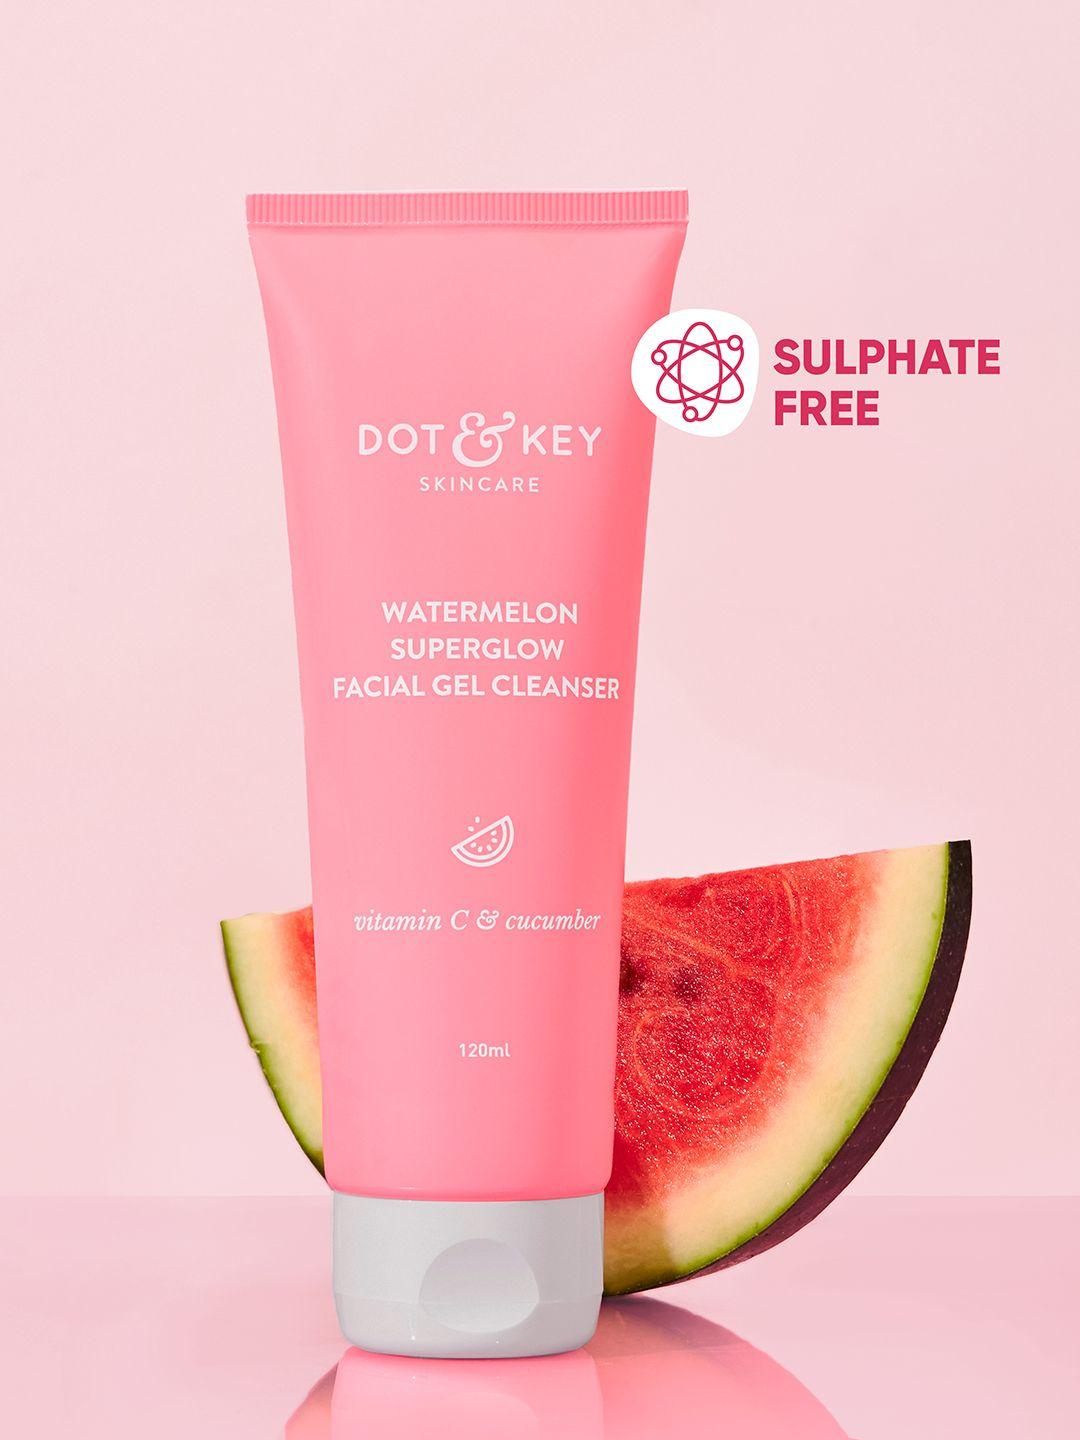 dot & key watermelon superglow facial gel cleanser with vitamin c & cucumber - 100 ml